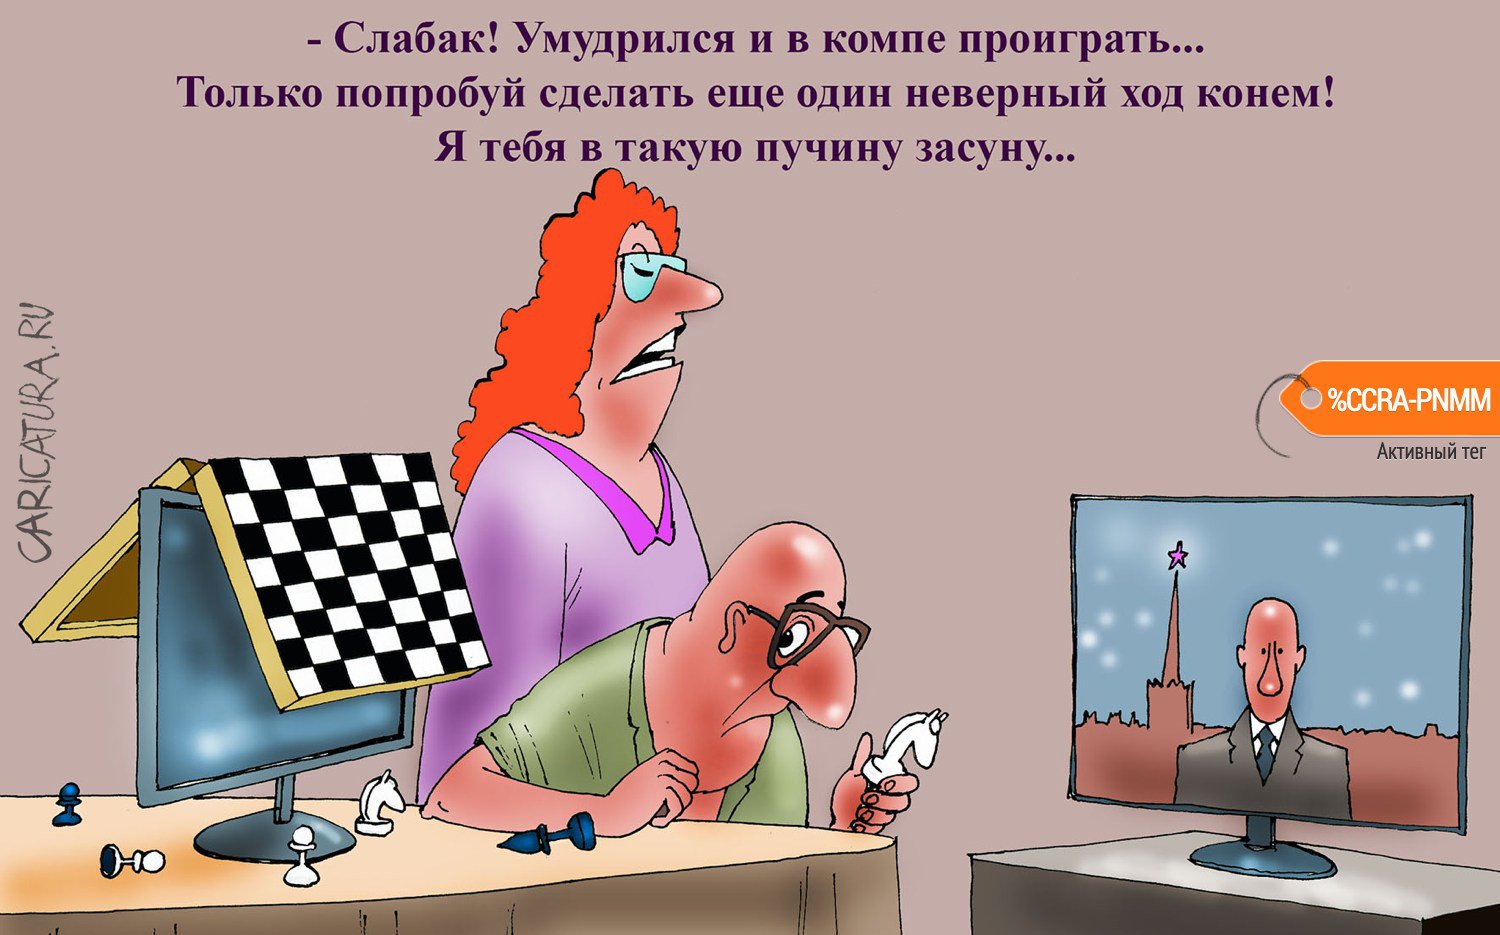 Карикатура "Шах и мат", Александр Попов